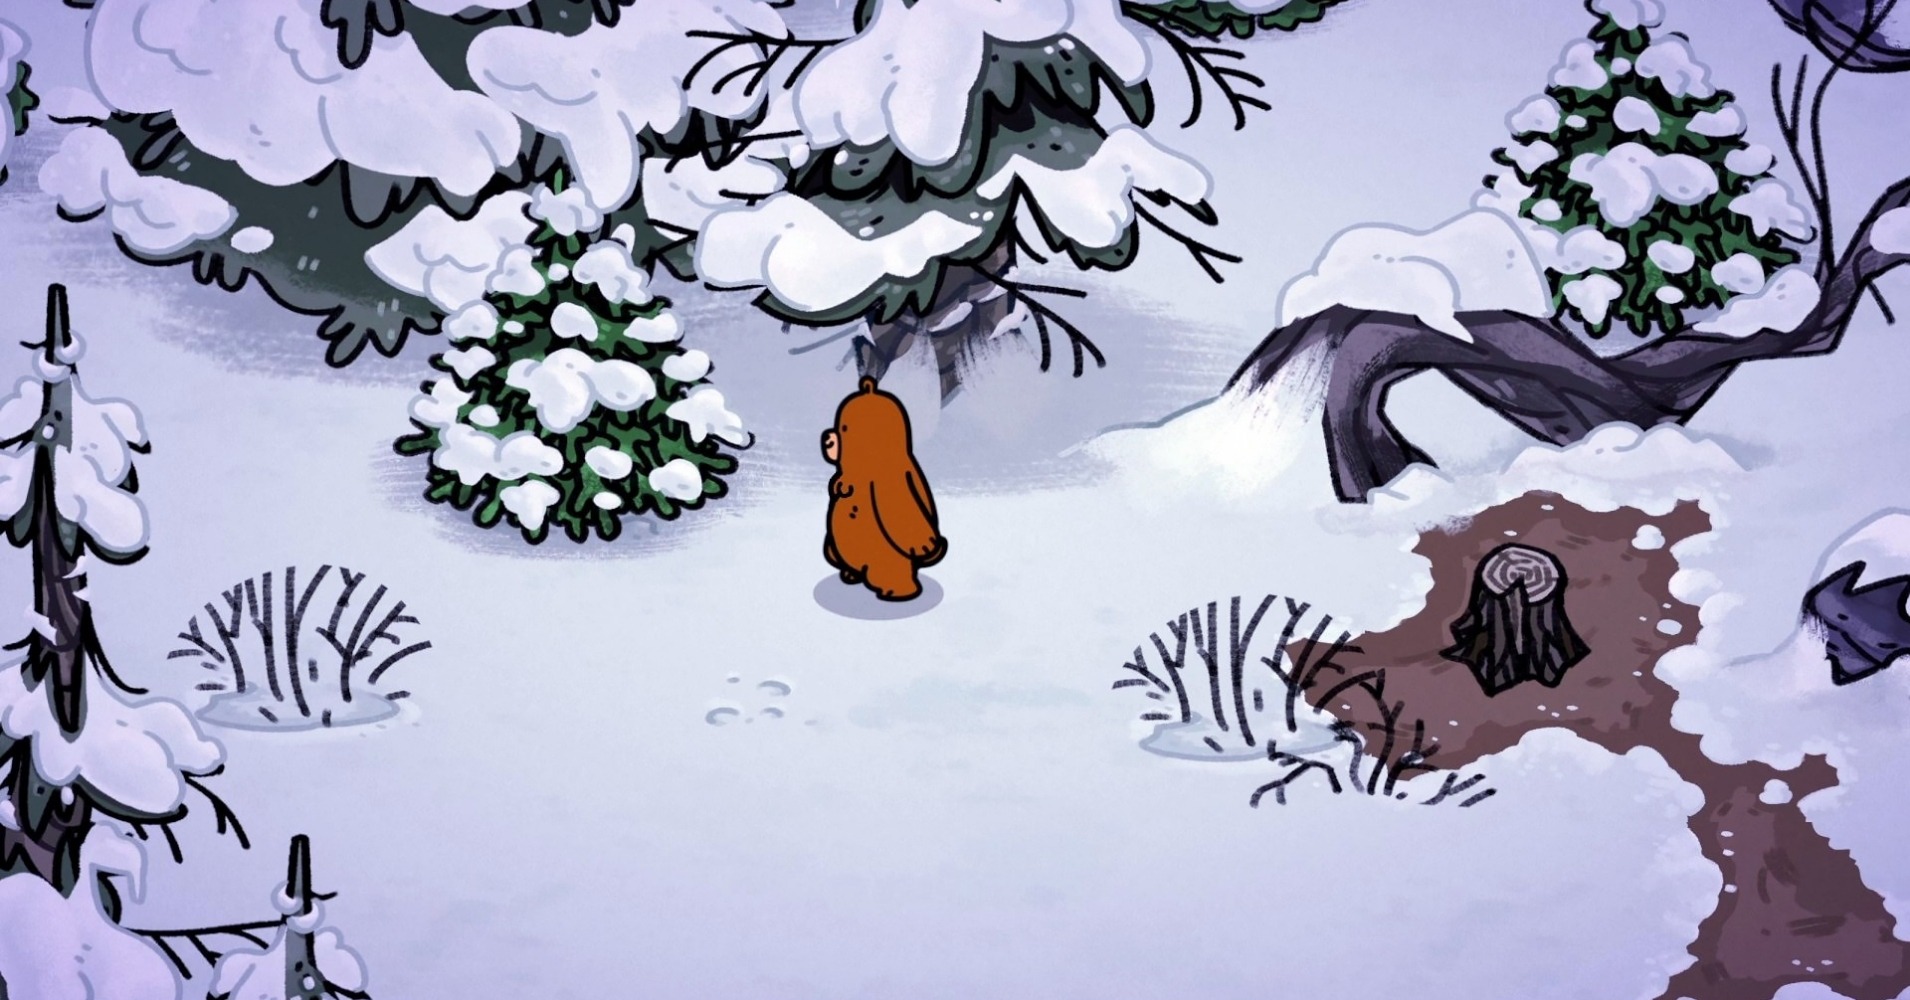 Bear and Breakfast Hank walking through snowy forest